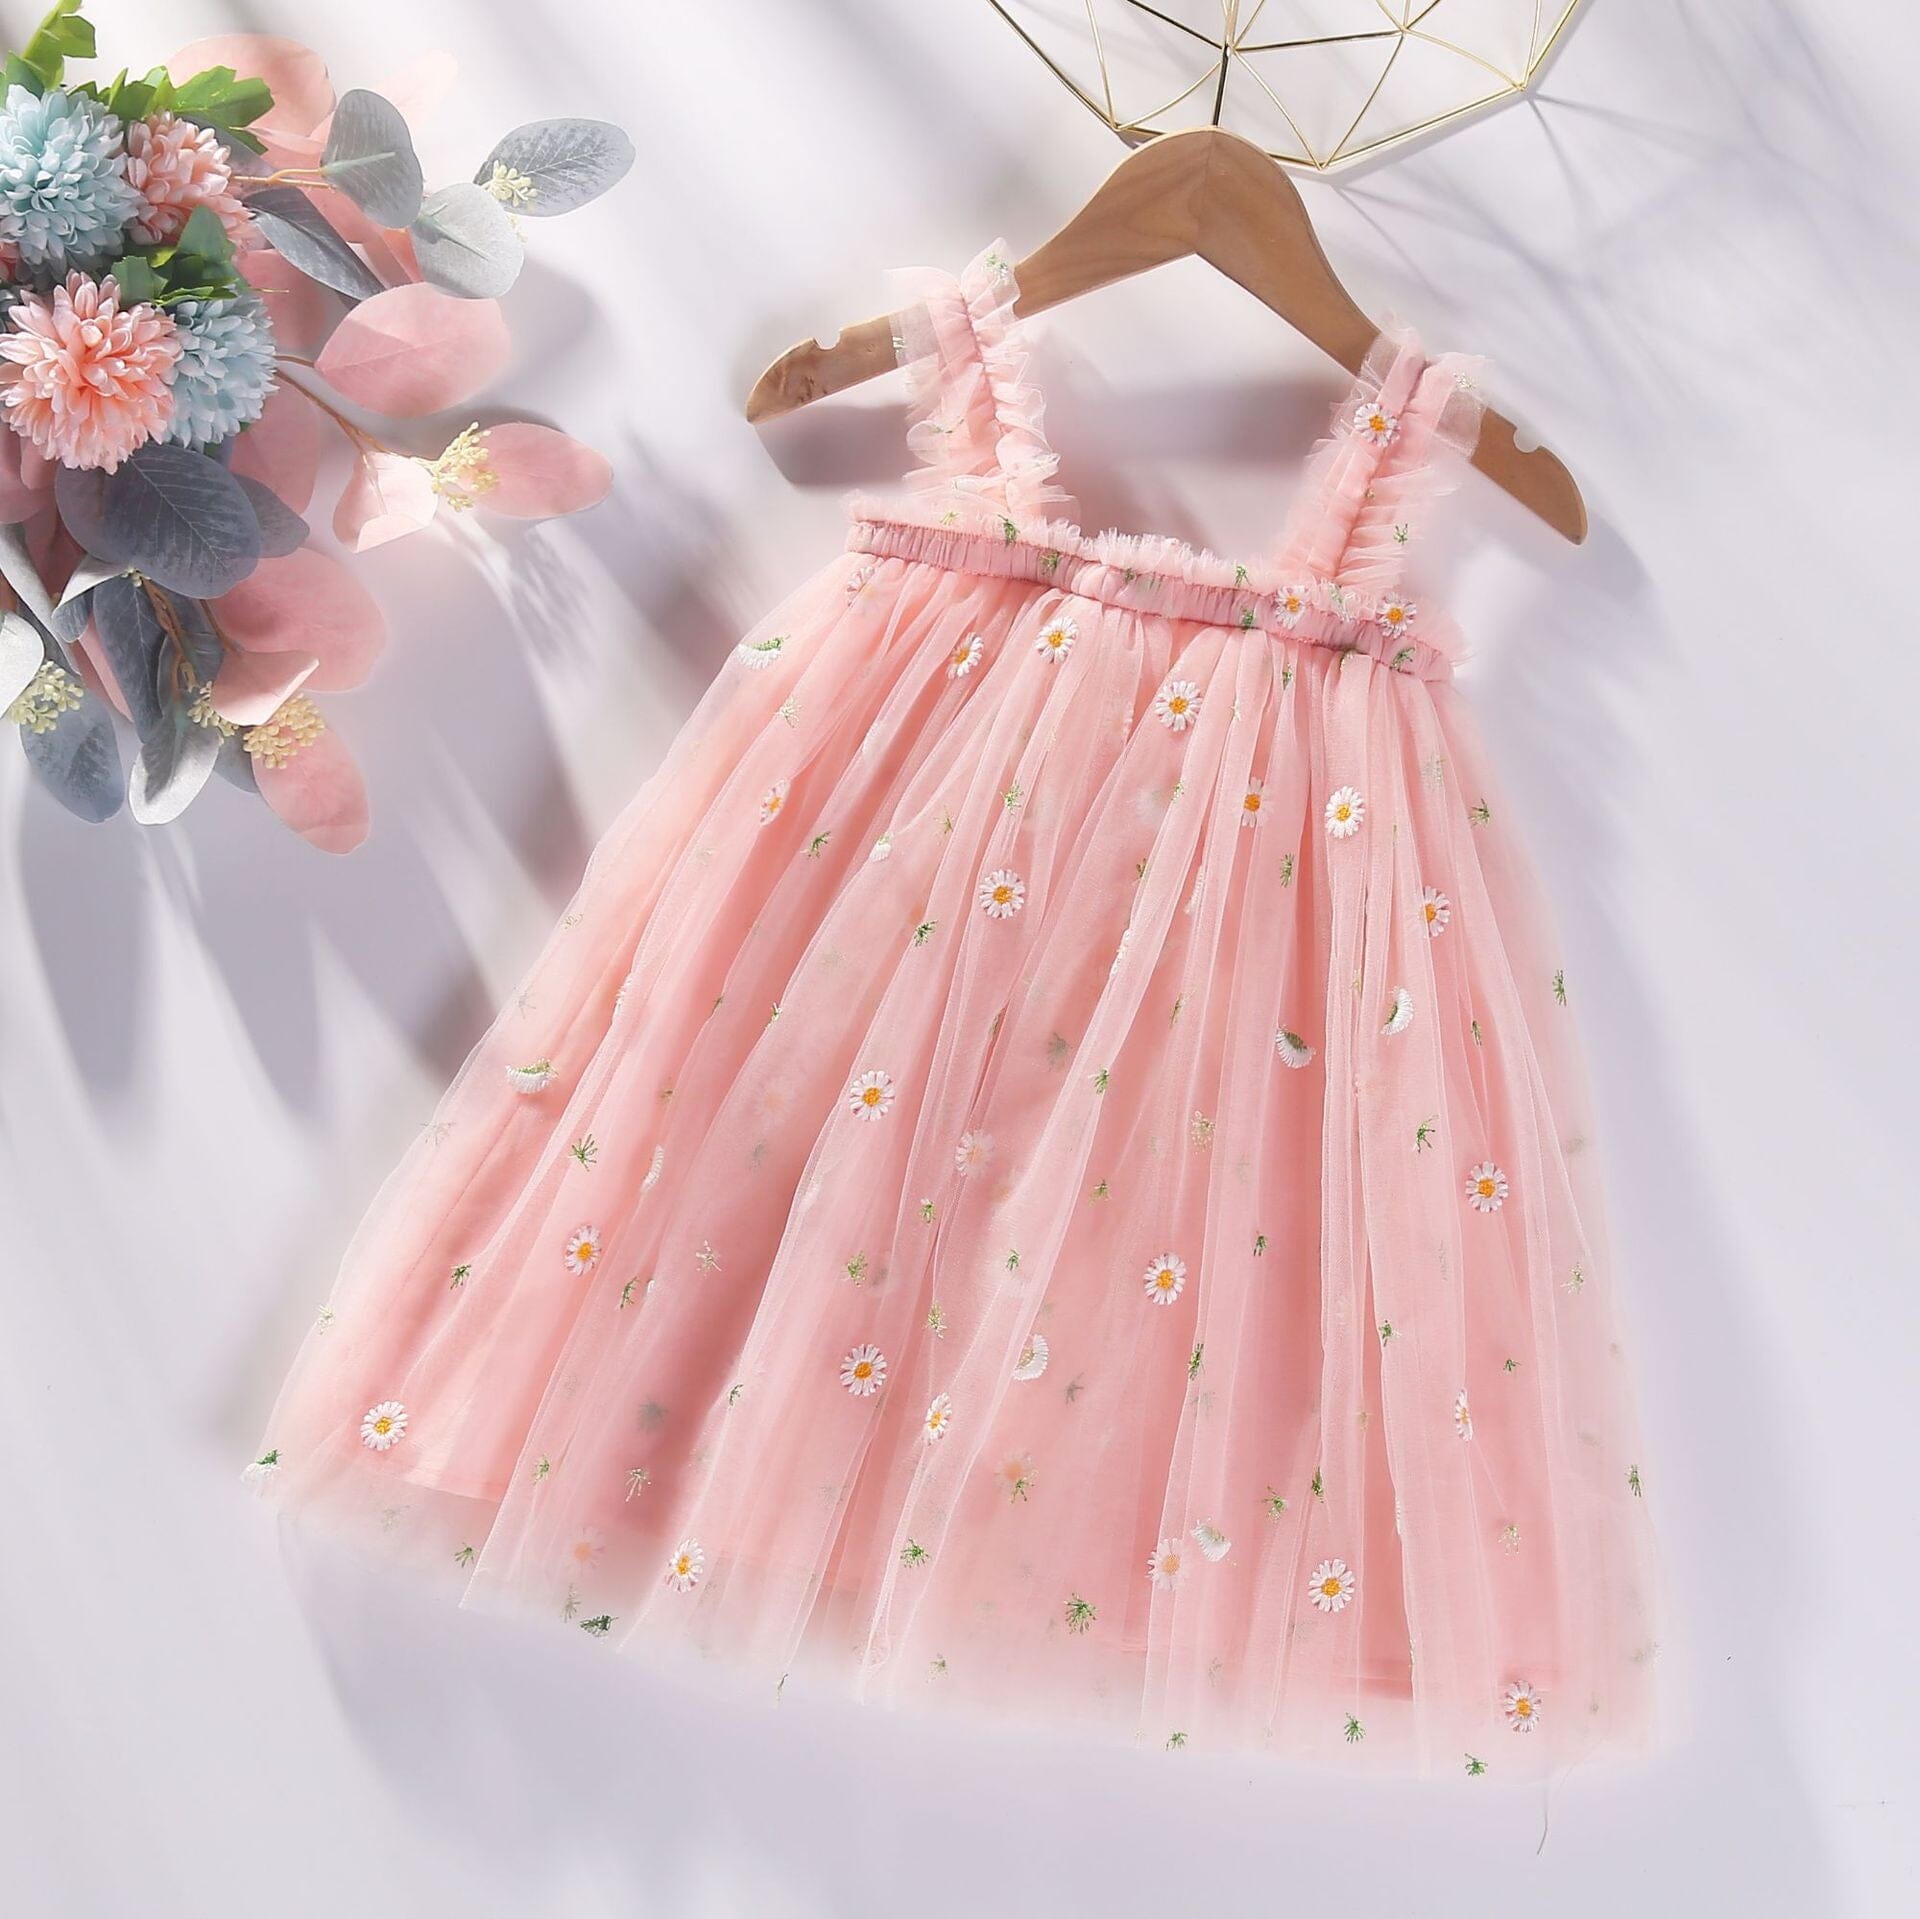 Vestido Infantil Bordado e Tule Loja Click Certo Rosa Margaridas 6-12 Meses 